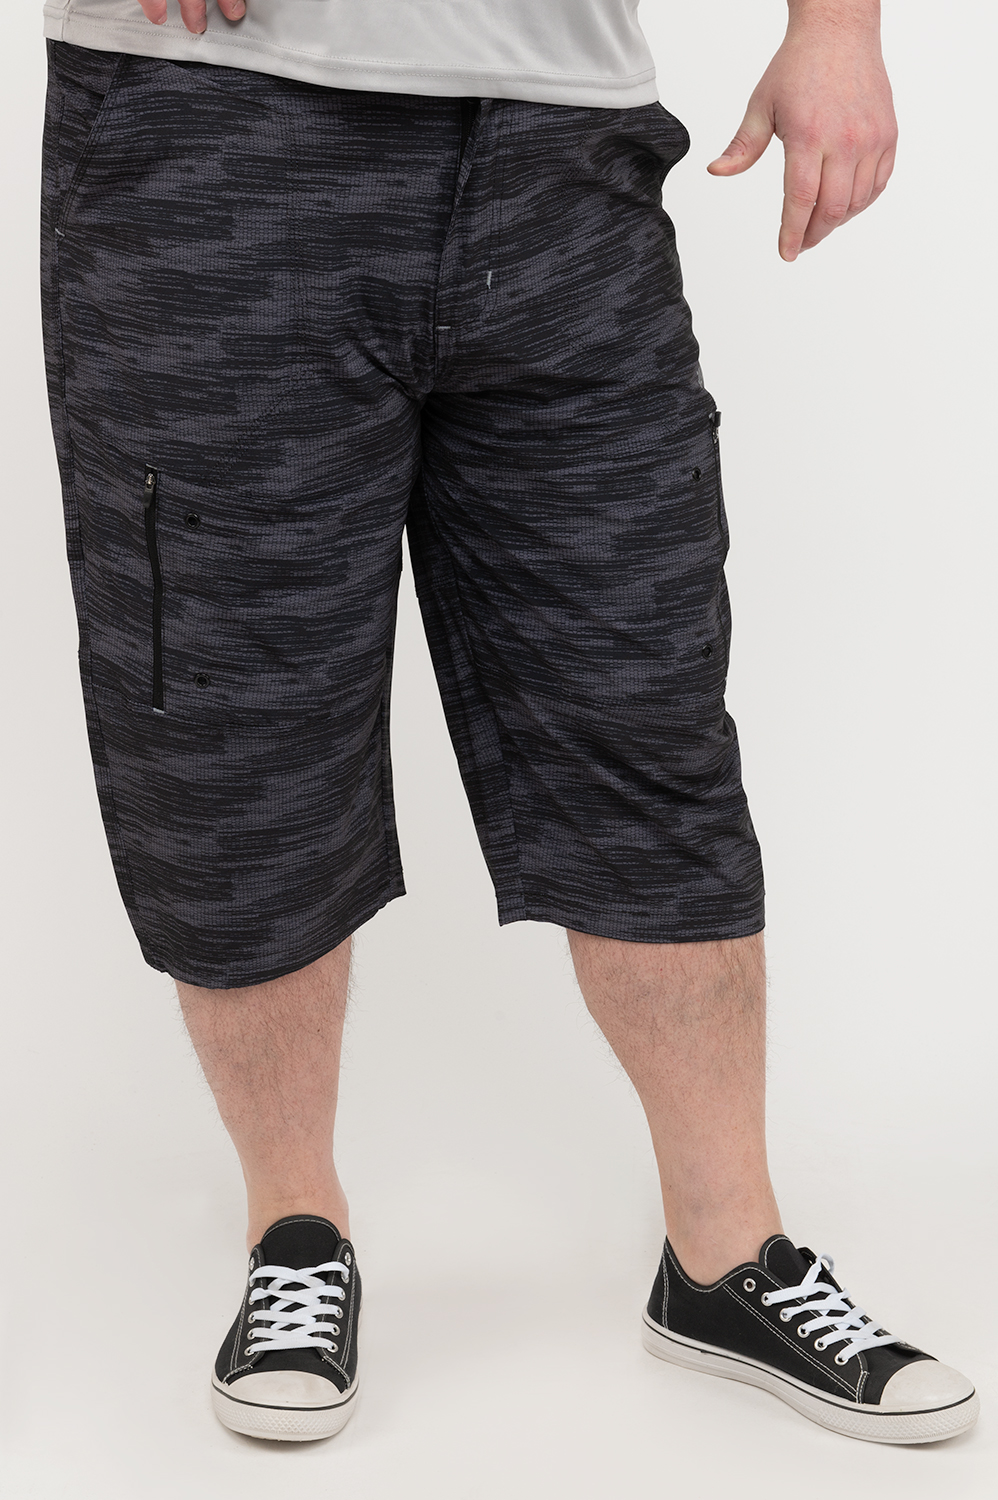 Capri shorts with zippered pockets - Heathered white - Plus Size